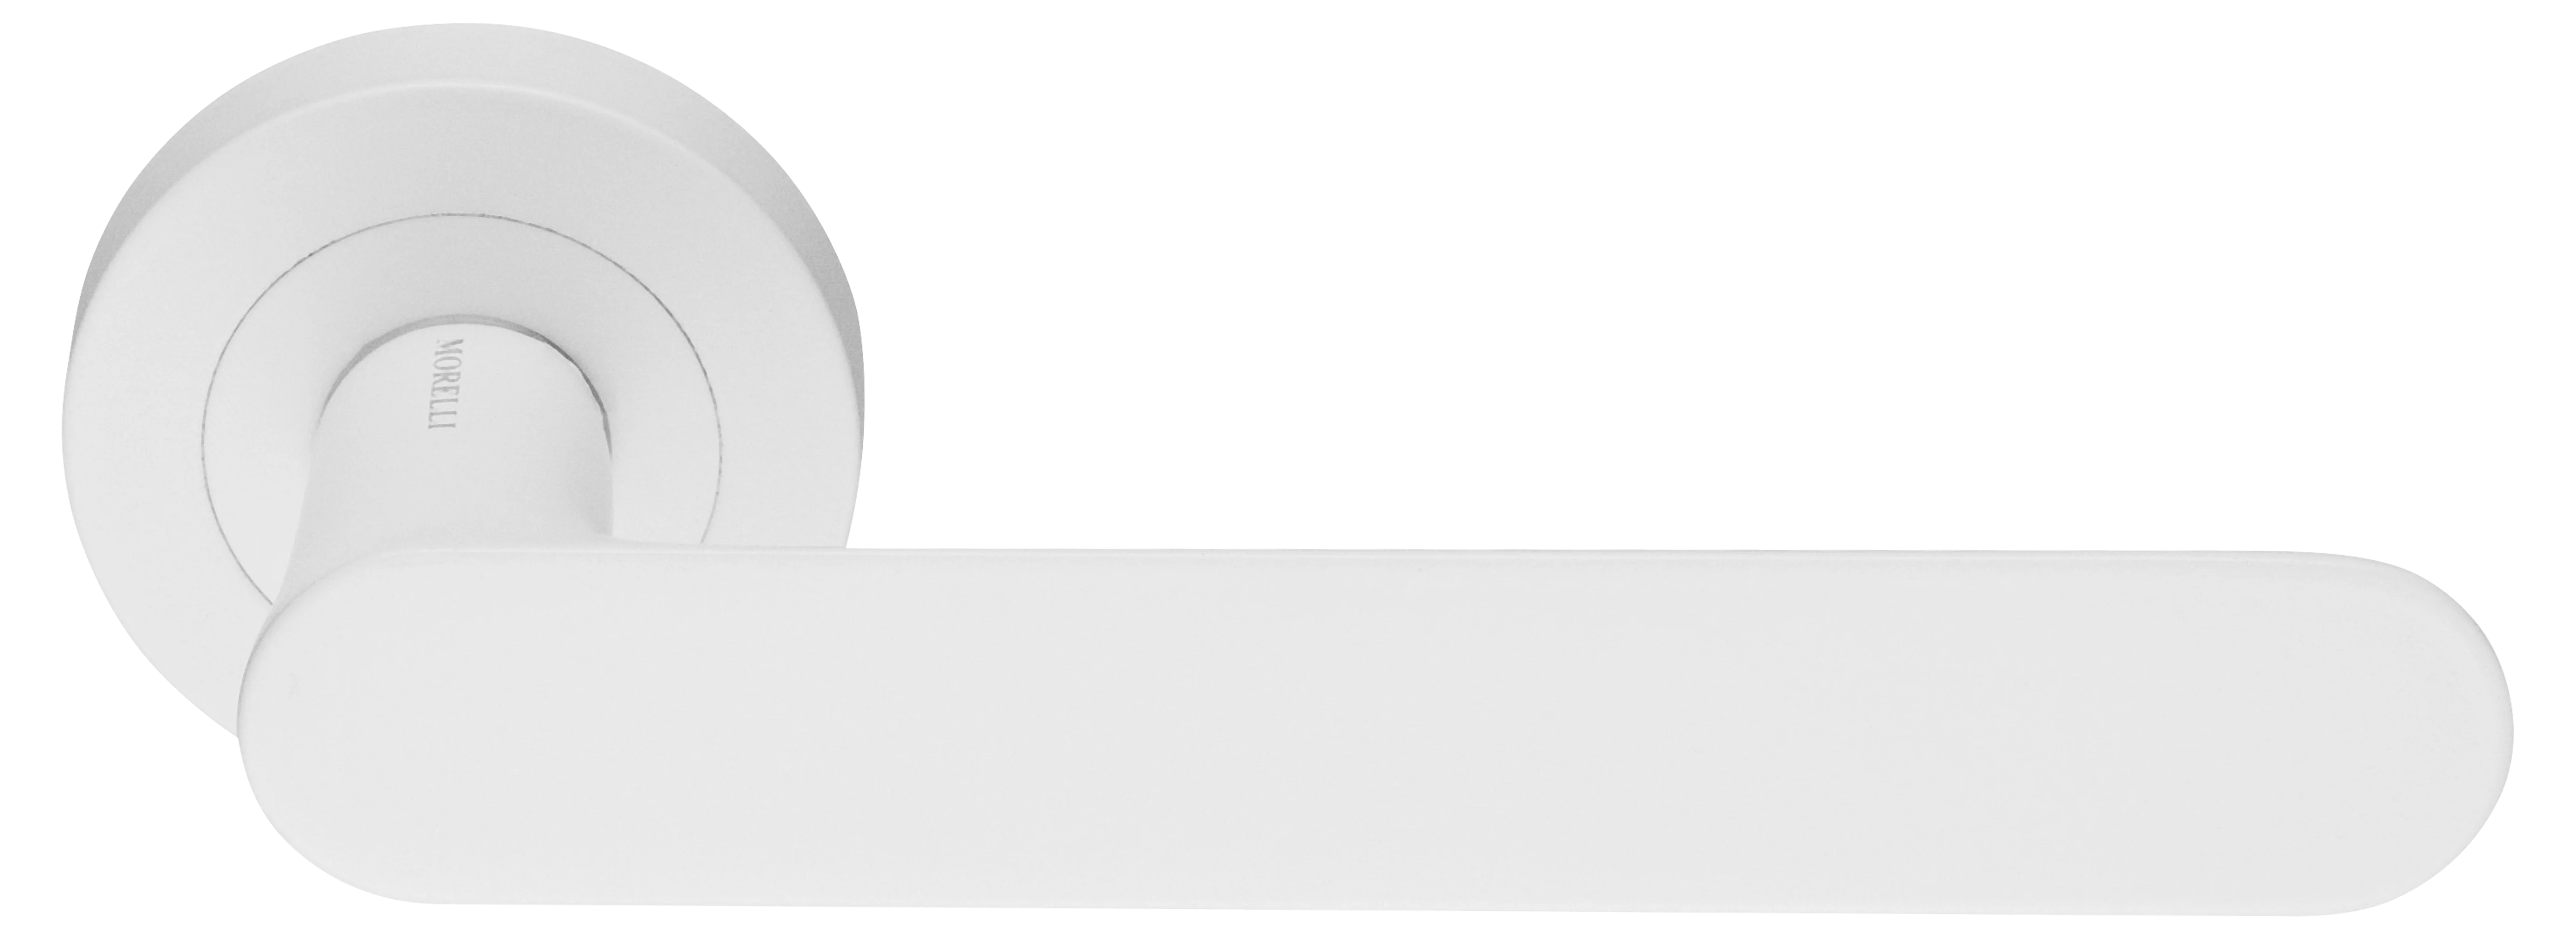 LE BOAT R2 BIA, ручка дверная, цвет - белый фото купить Оренбург